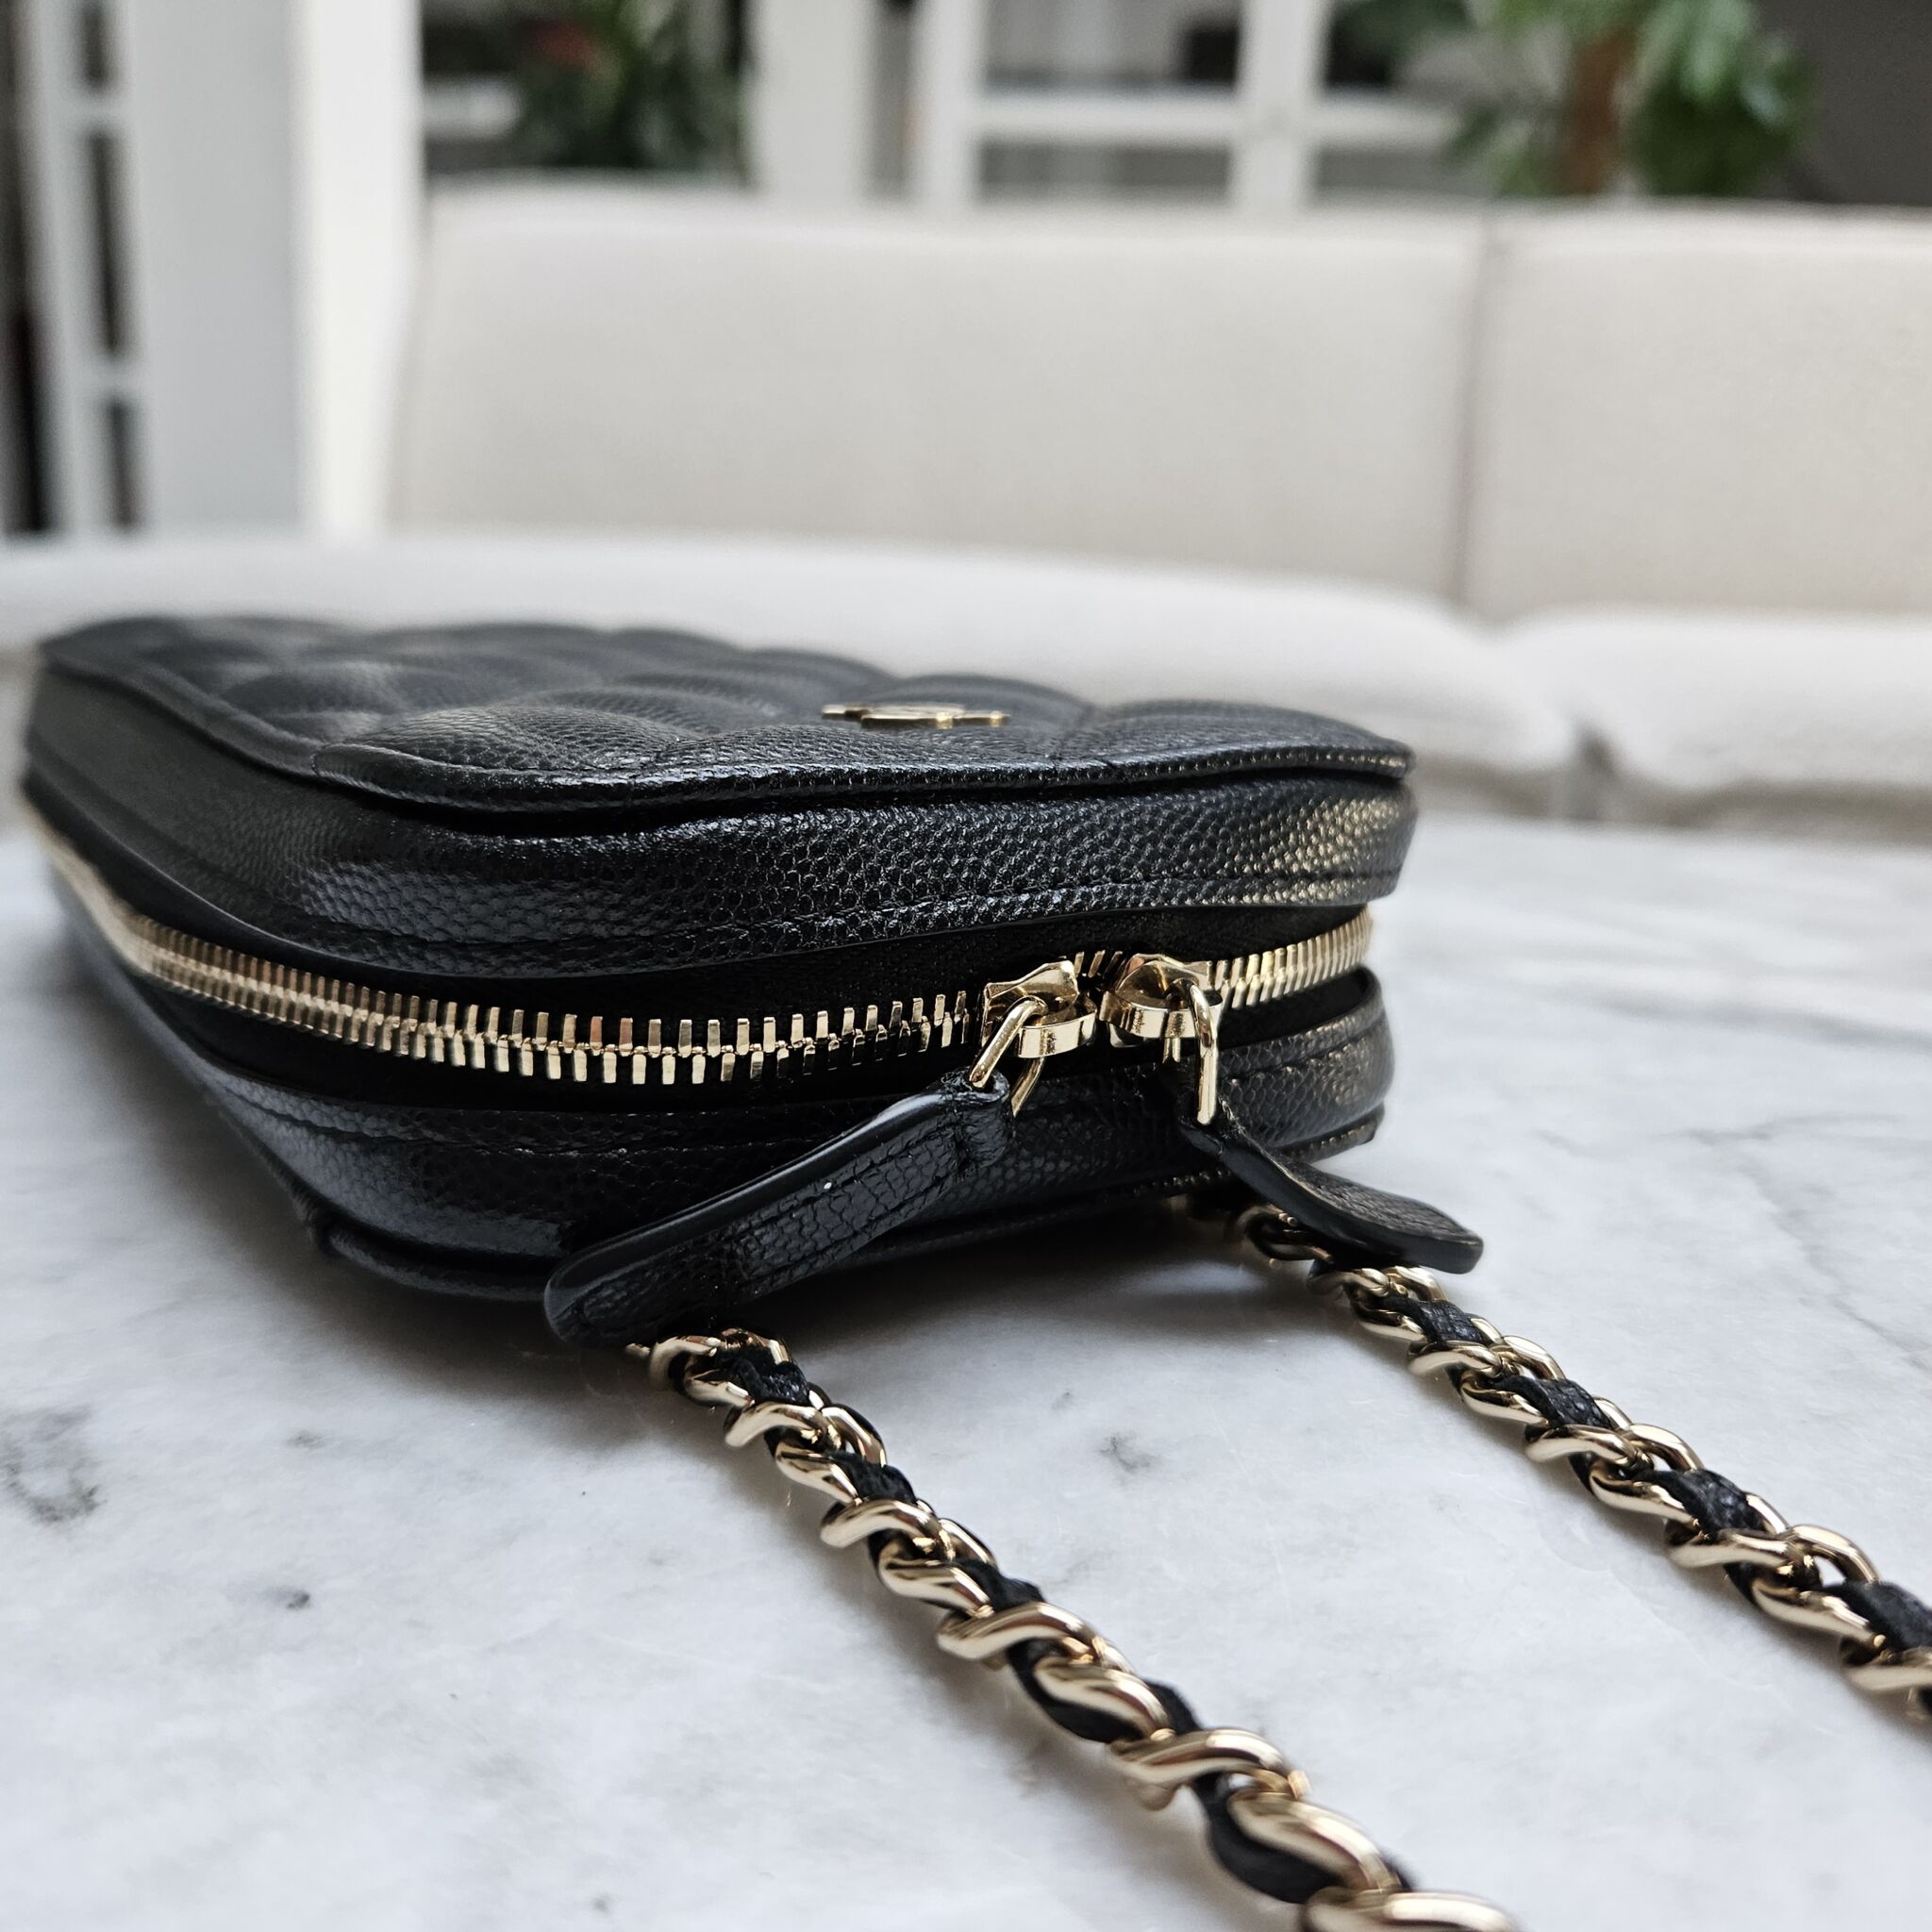 Chanel Phone Bag, Caviar, Black GHW - Laulay Luxury